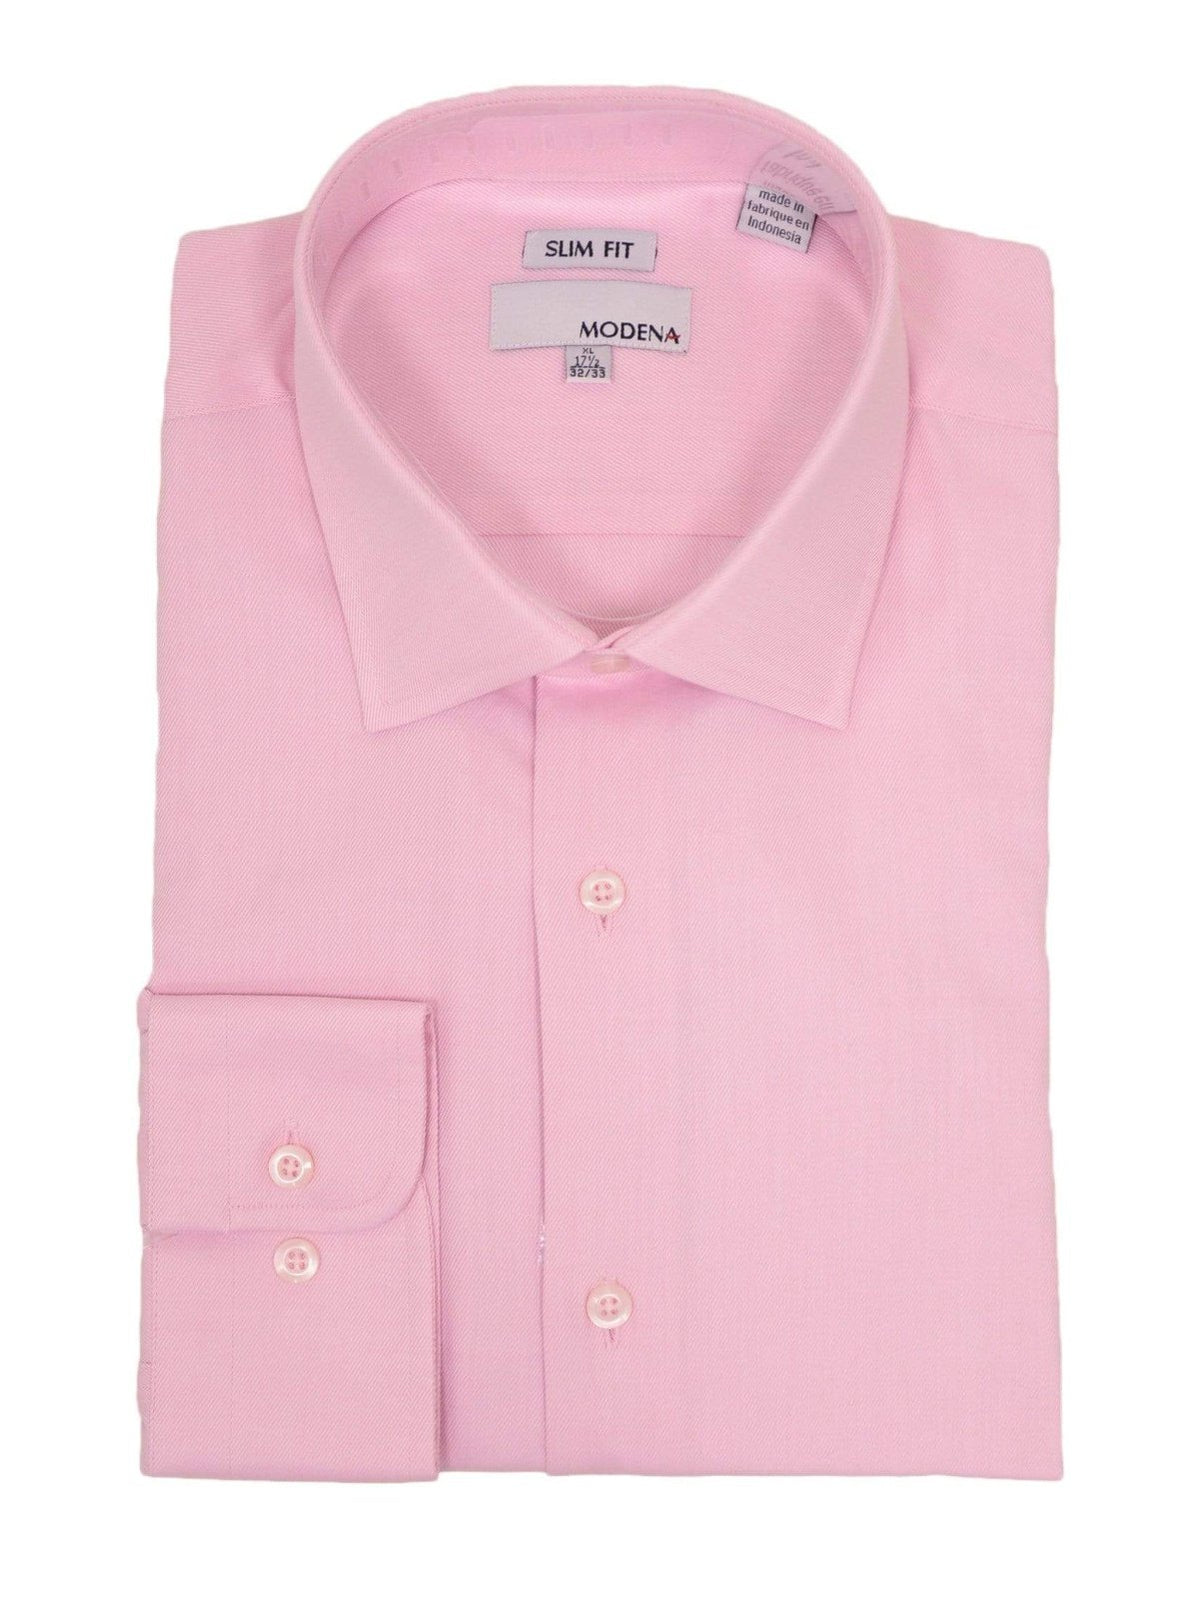 Modena SHIRTS 15 34/35 Mens Slim Fit Solid Pink Twill Spread Collar Cotton Blend Dress Shirt